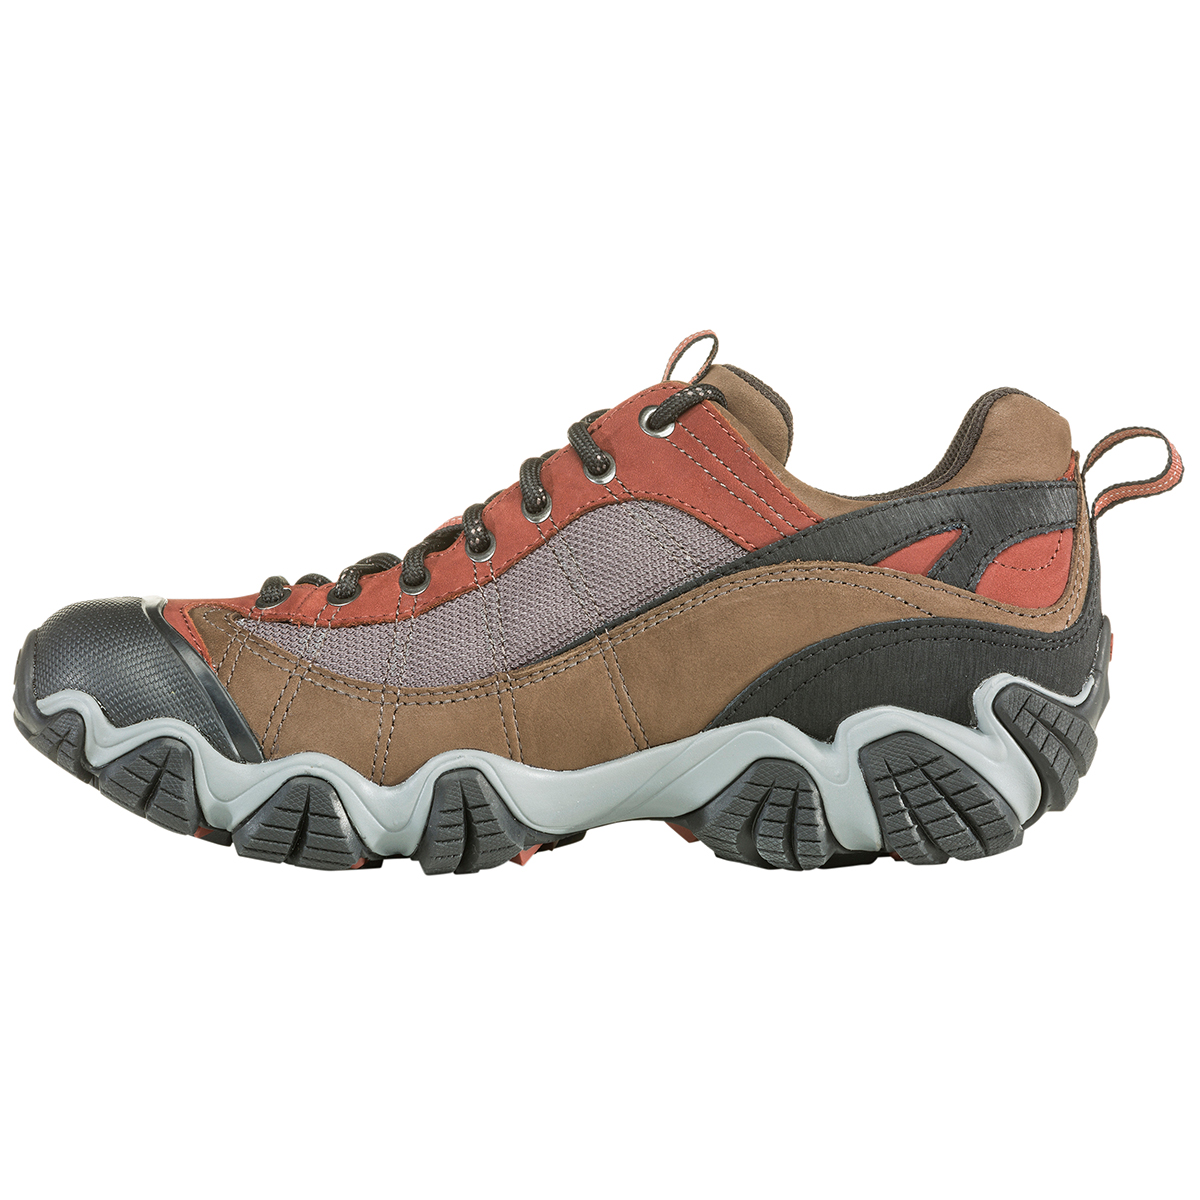 Firebrand II BDry Hiking Shoes 